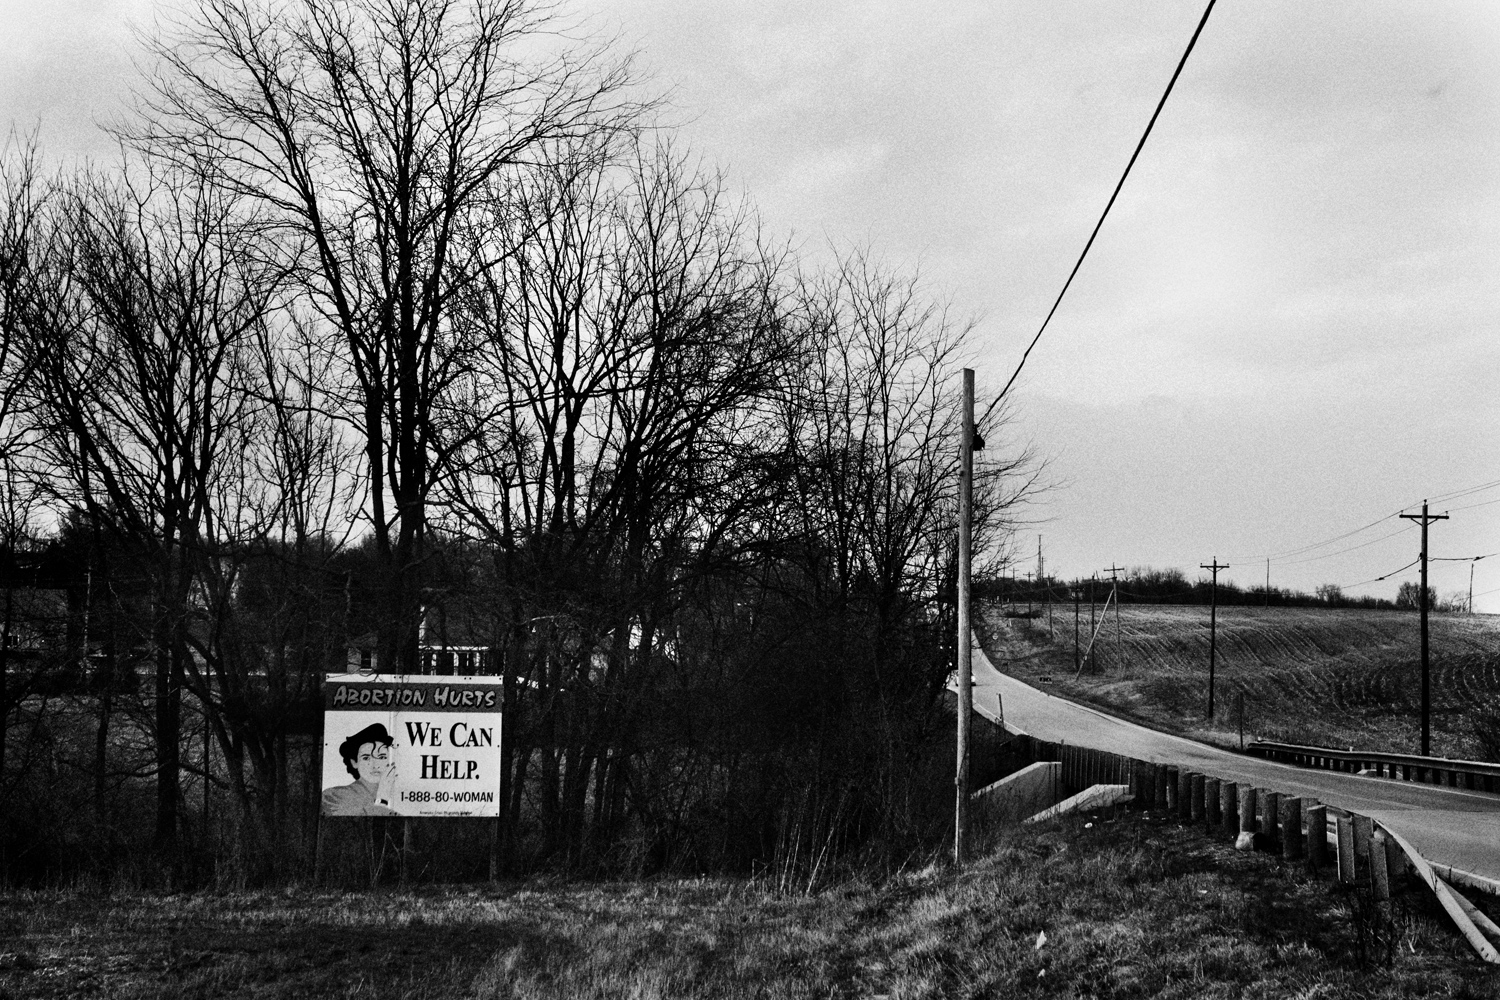 March 4, 2012. A road-side sign outside Lebanon, Ohio.